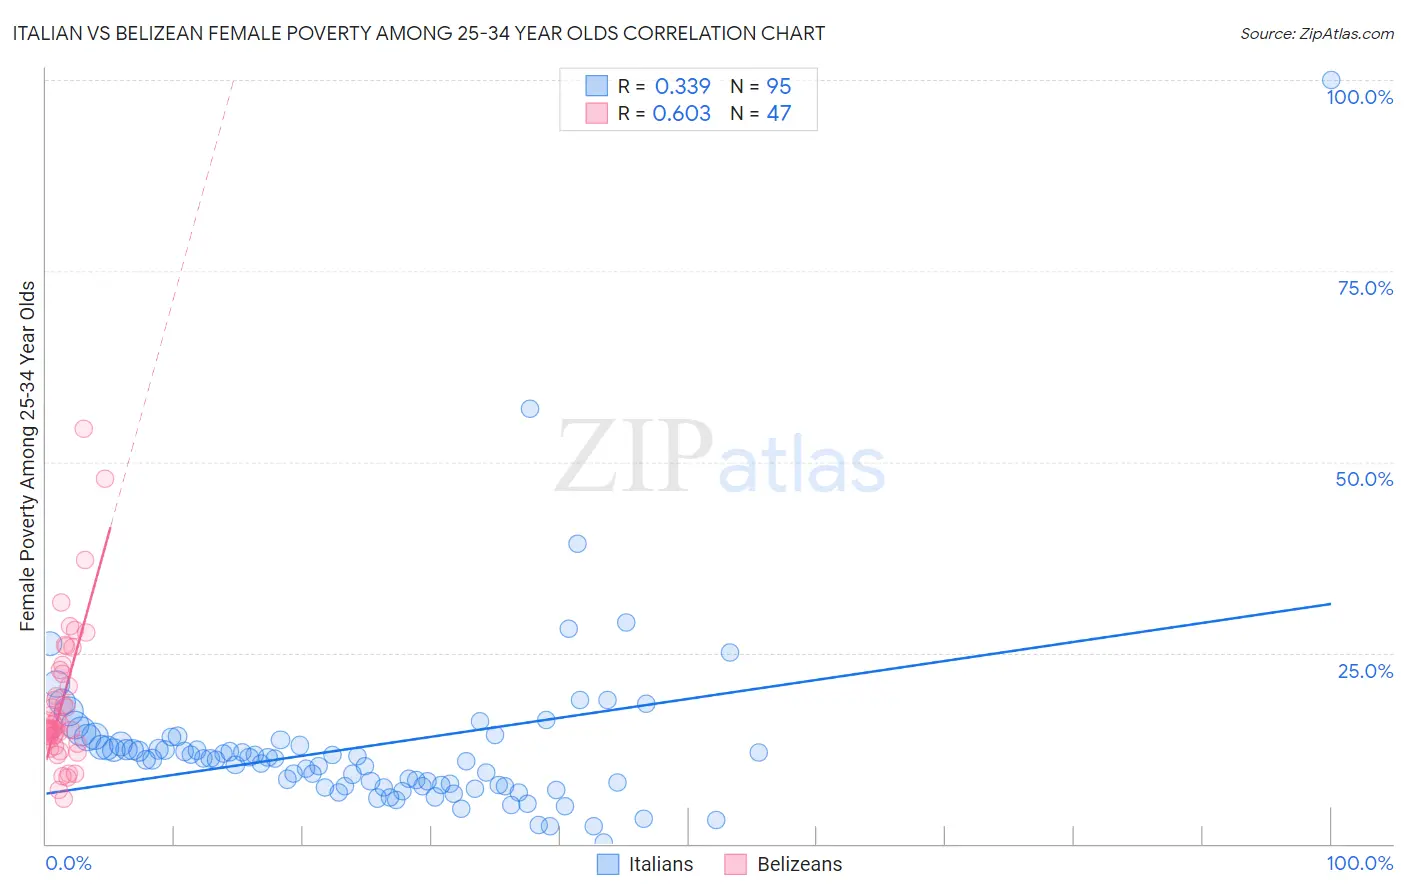 Italian vs Belizean Female Poverty Among 25-34 Year Olds